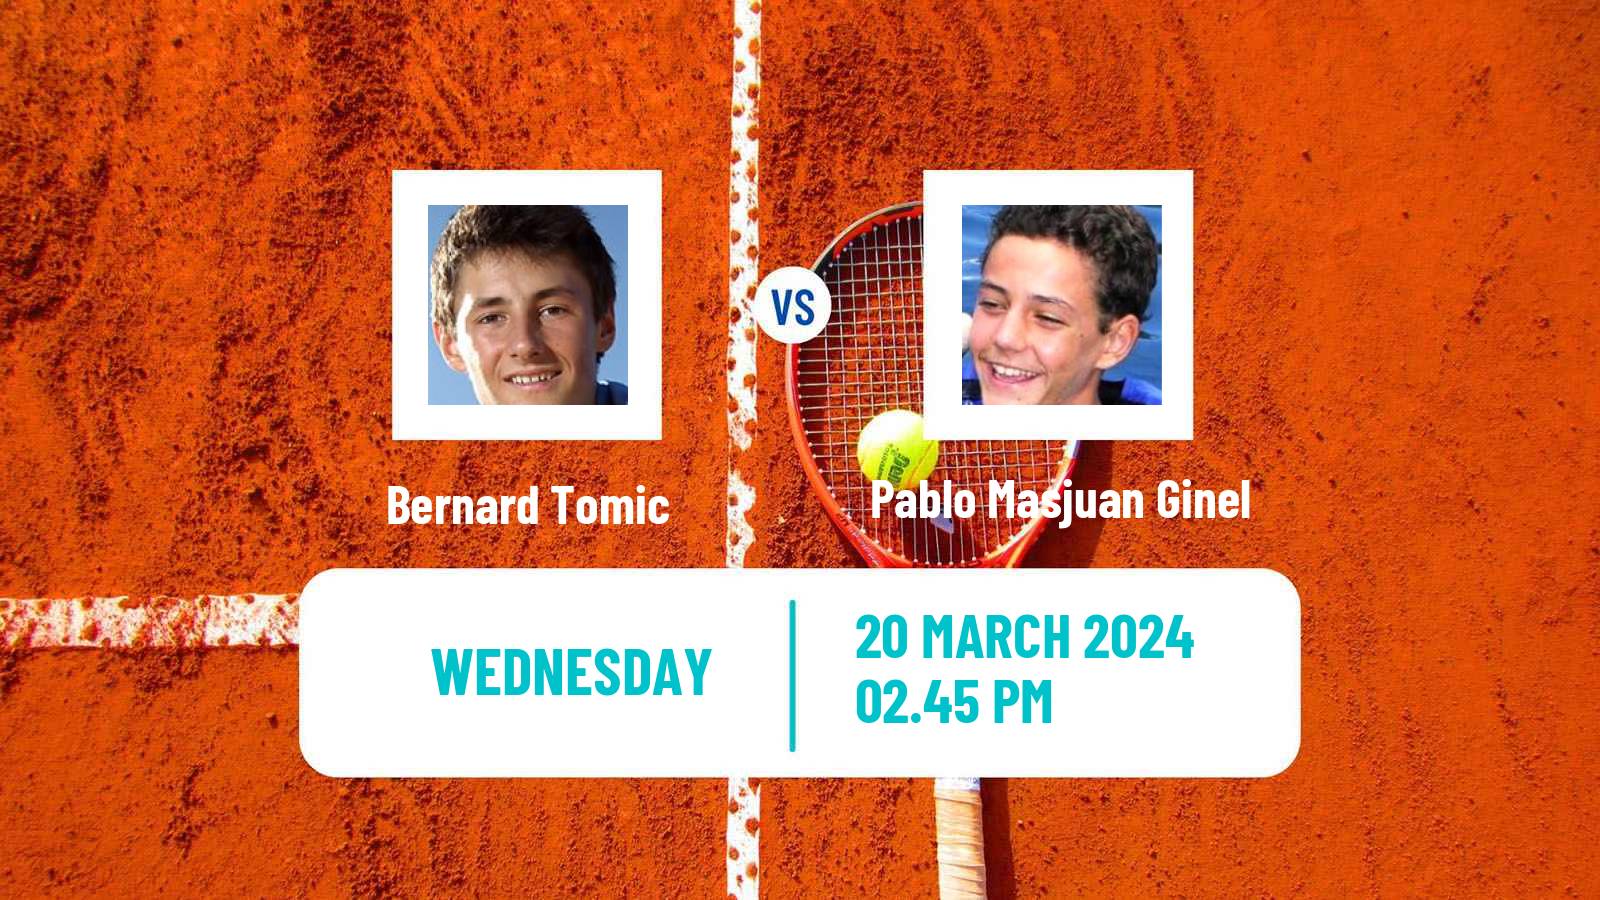 Tennis ITF M25 Calabasas Ca Men Bernard Tomic - Pablo Masjuan Ginel